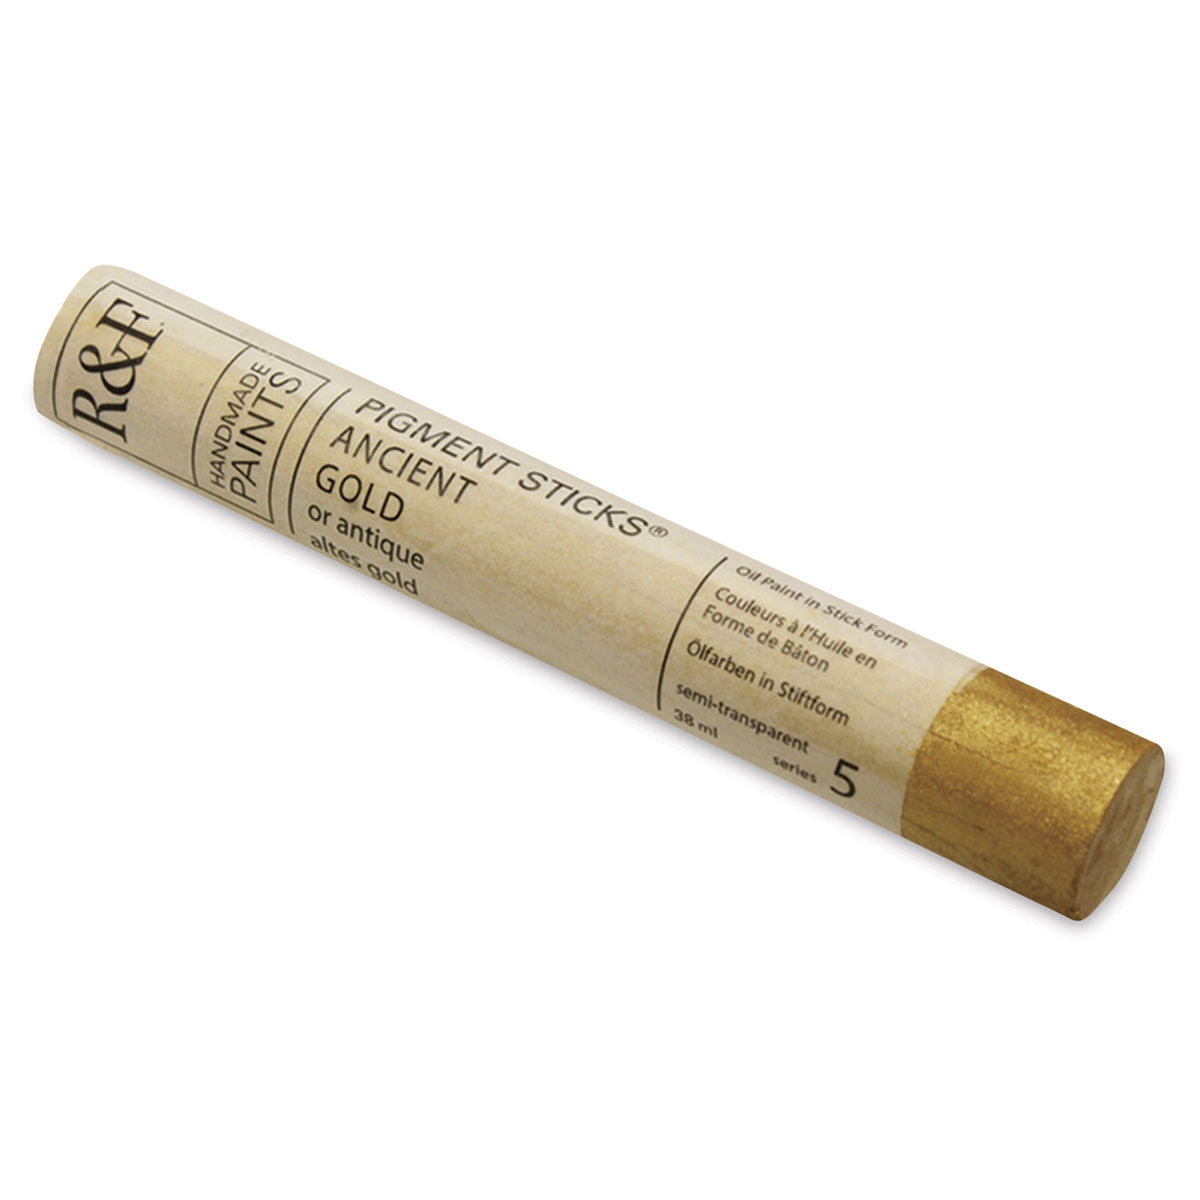 R&F Pigment Stick - Ancient Gold, 38 ml